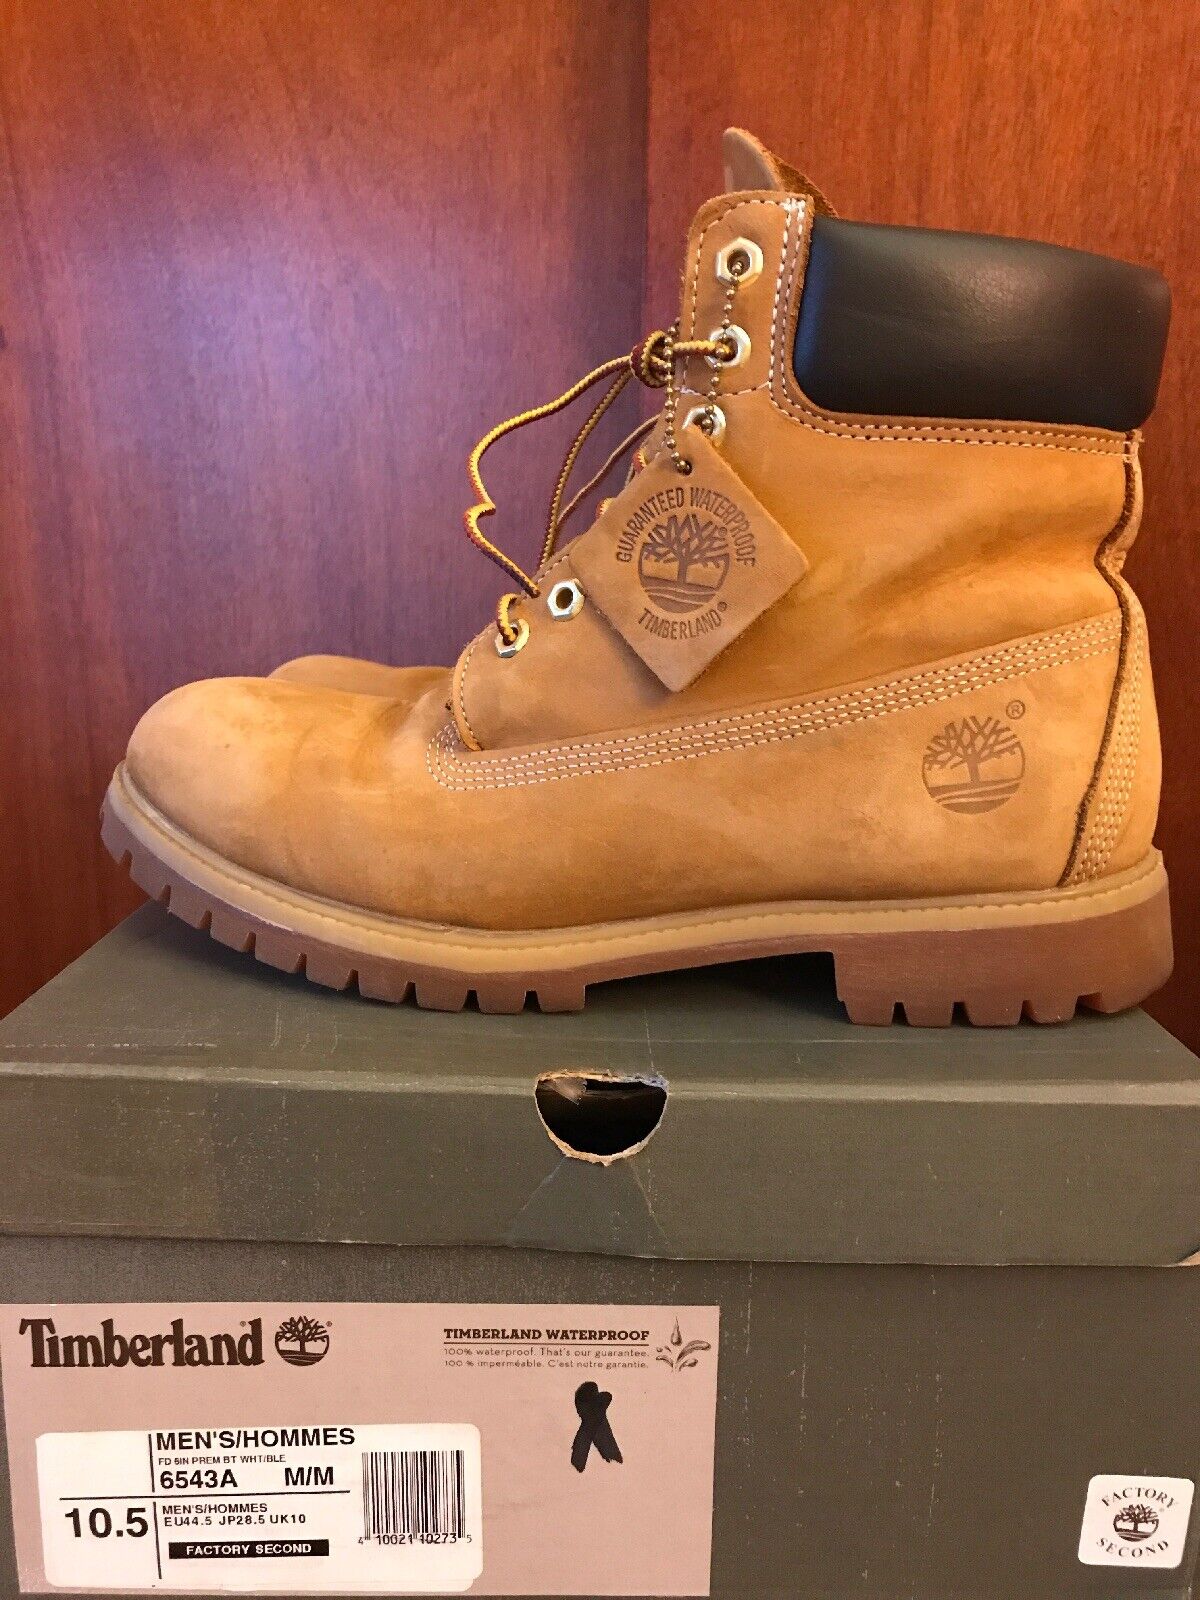 Timberland 6 inch 10.5 M Men's /Hommes Boots | eBay